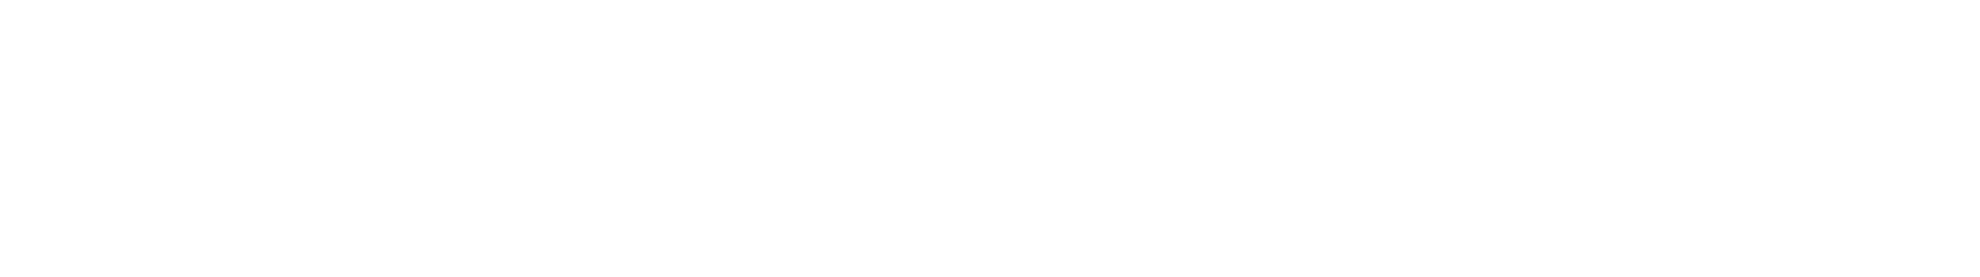 Waymo, Google, Atlassian, and more